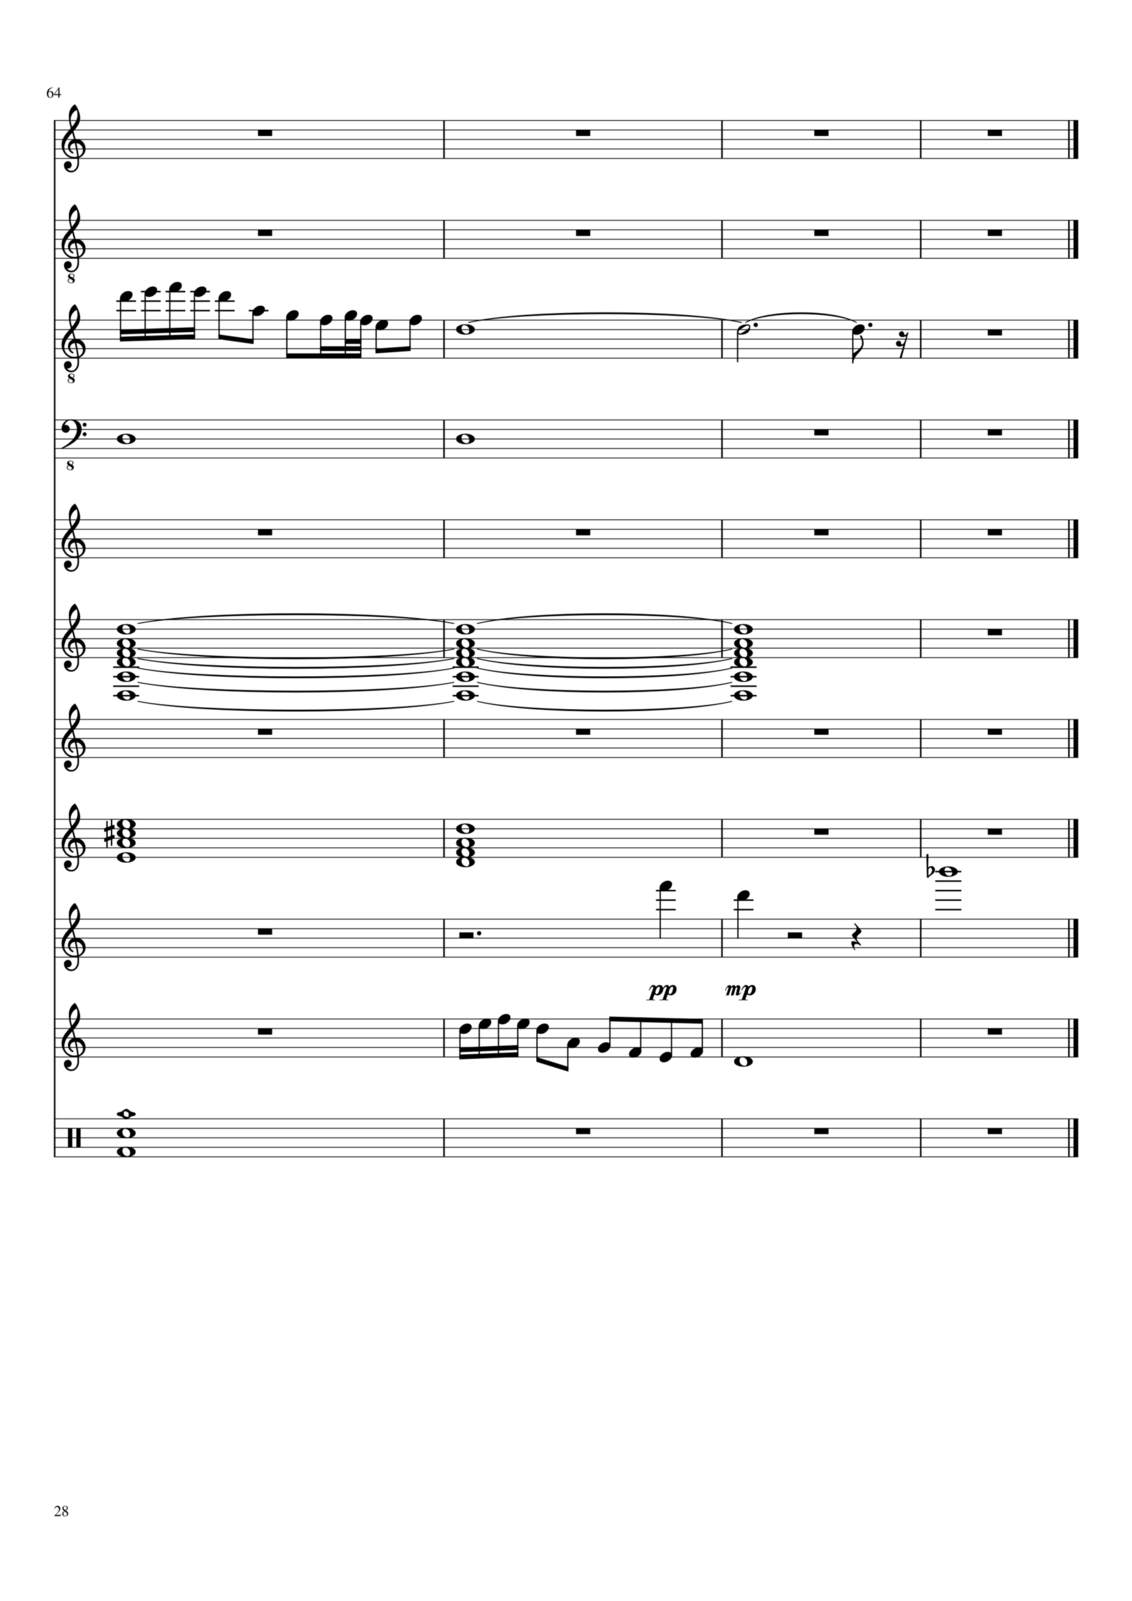 Gorod, kotorogo net slide, Image 28